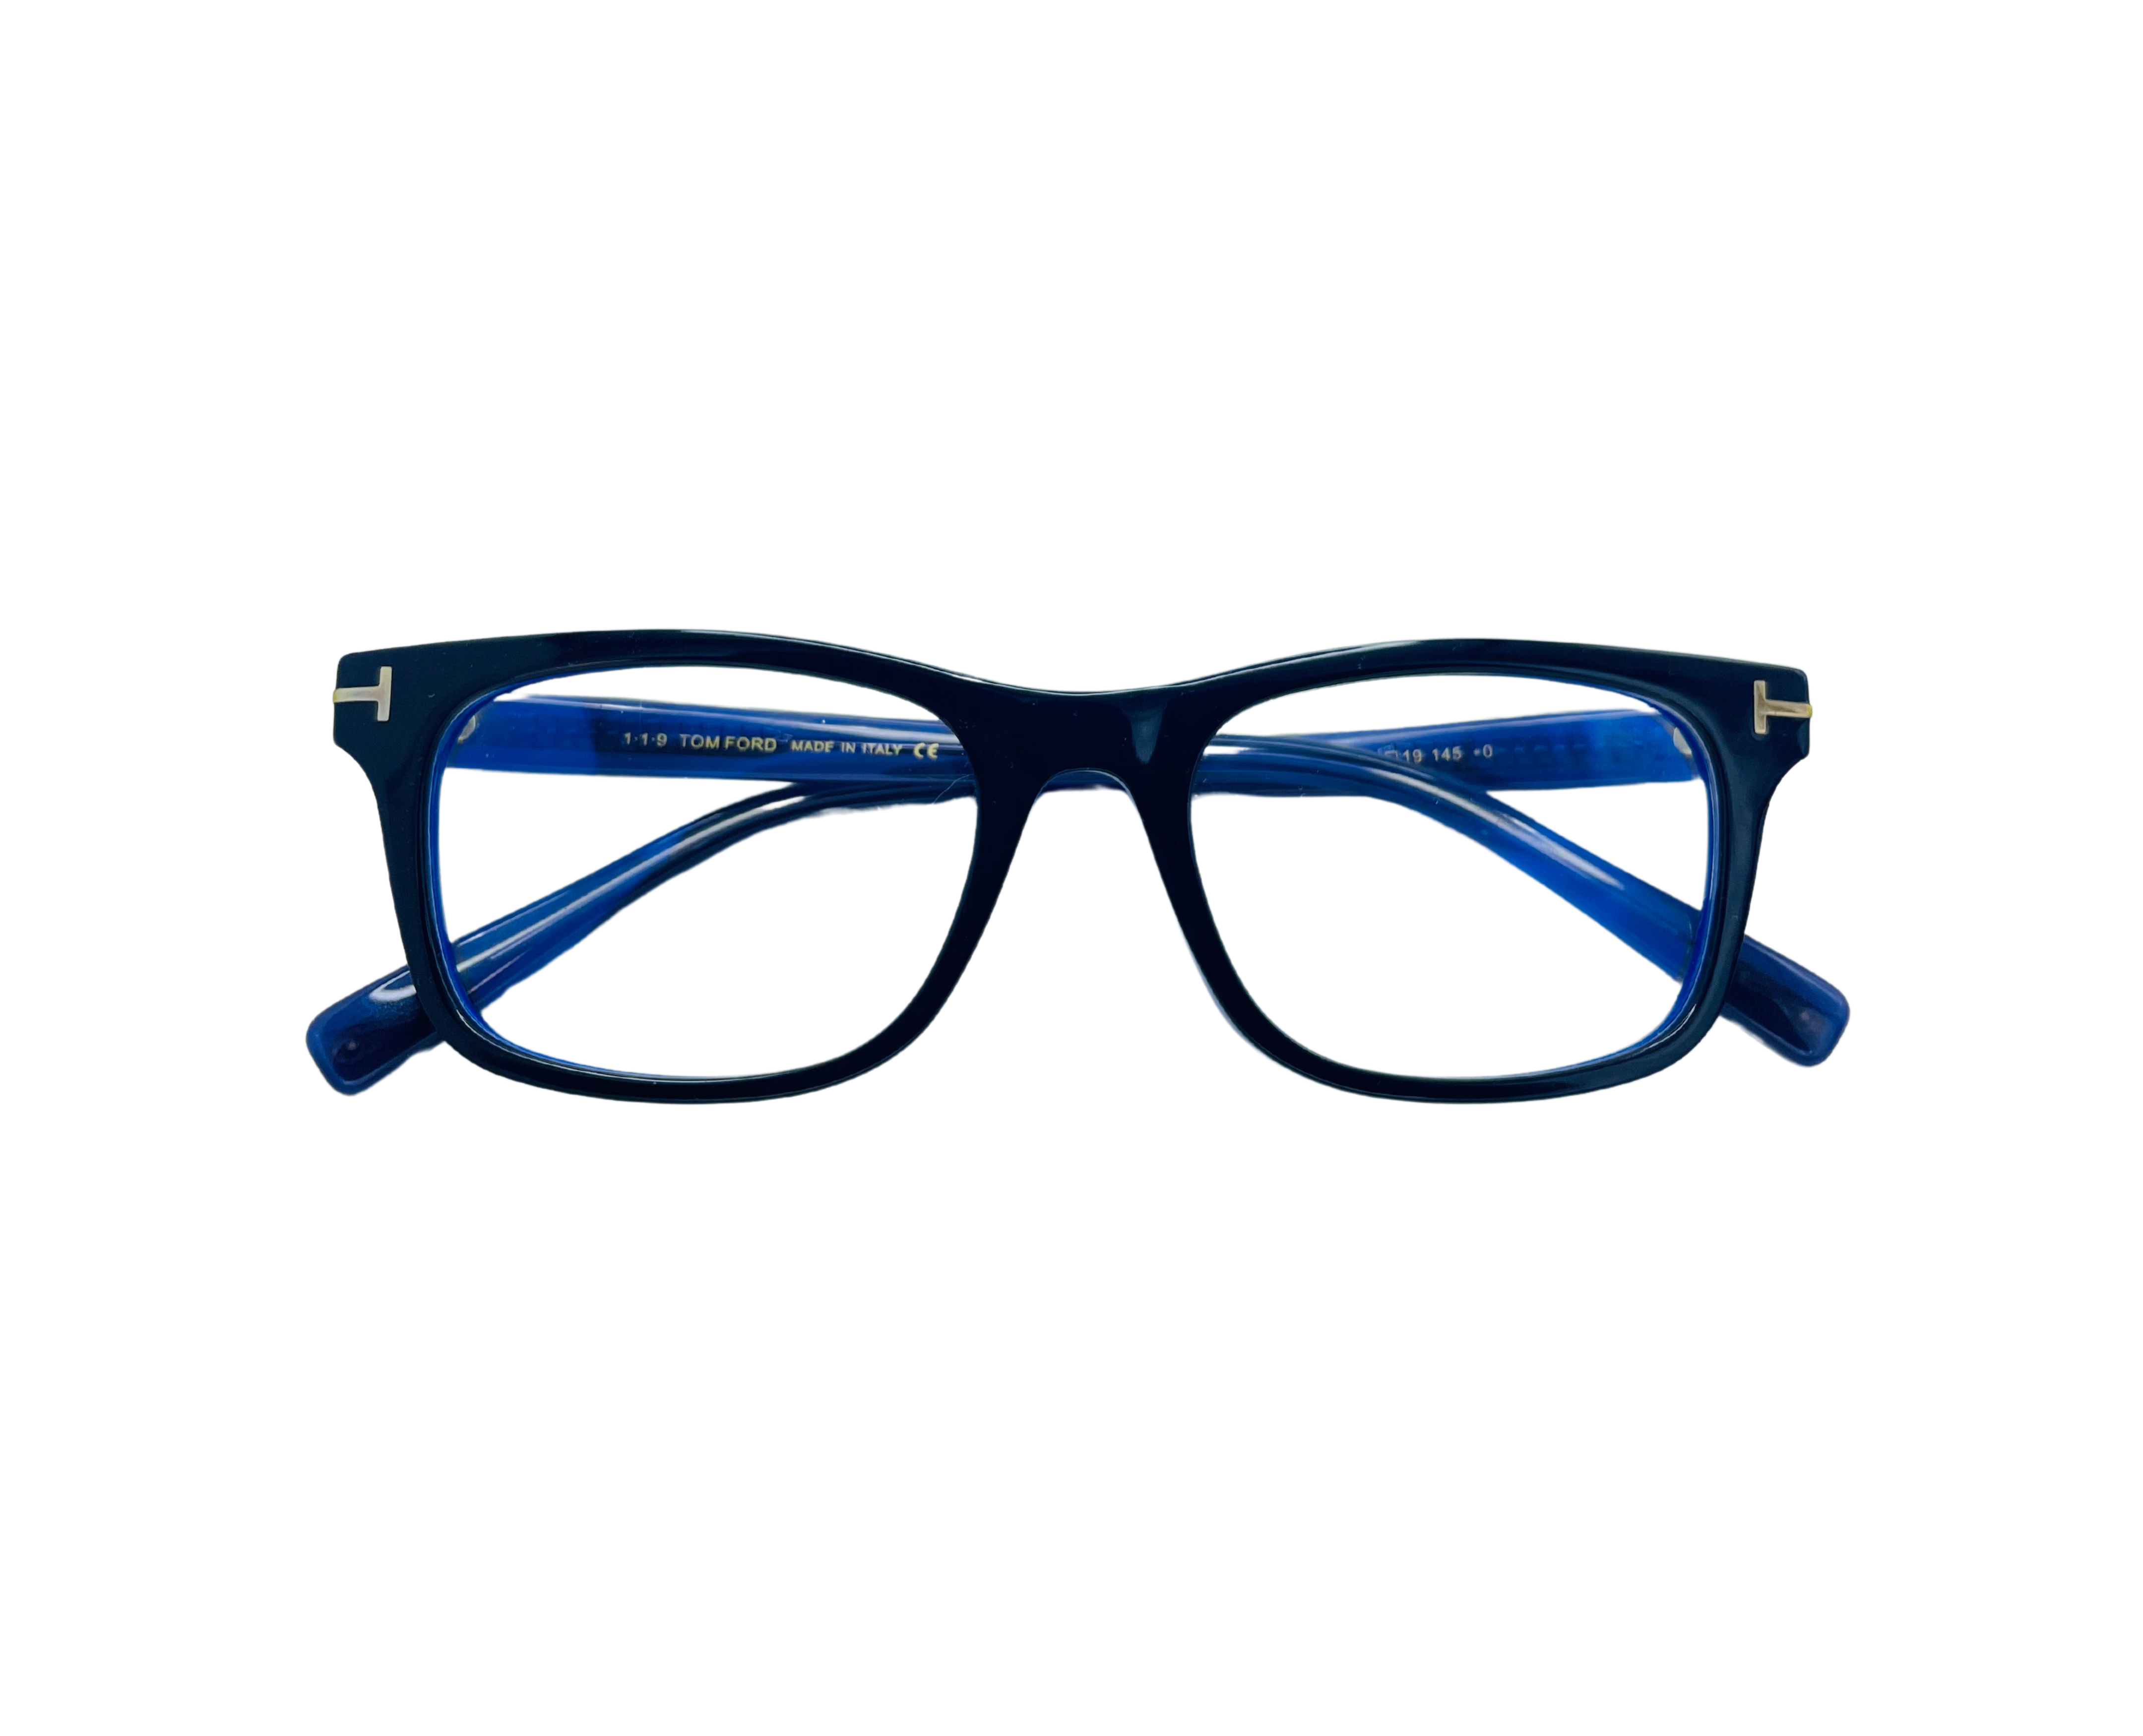 NS Luxury - 5824 - Blue - Eyeglasses